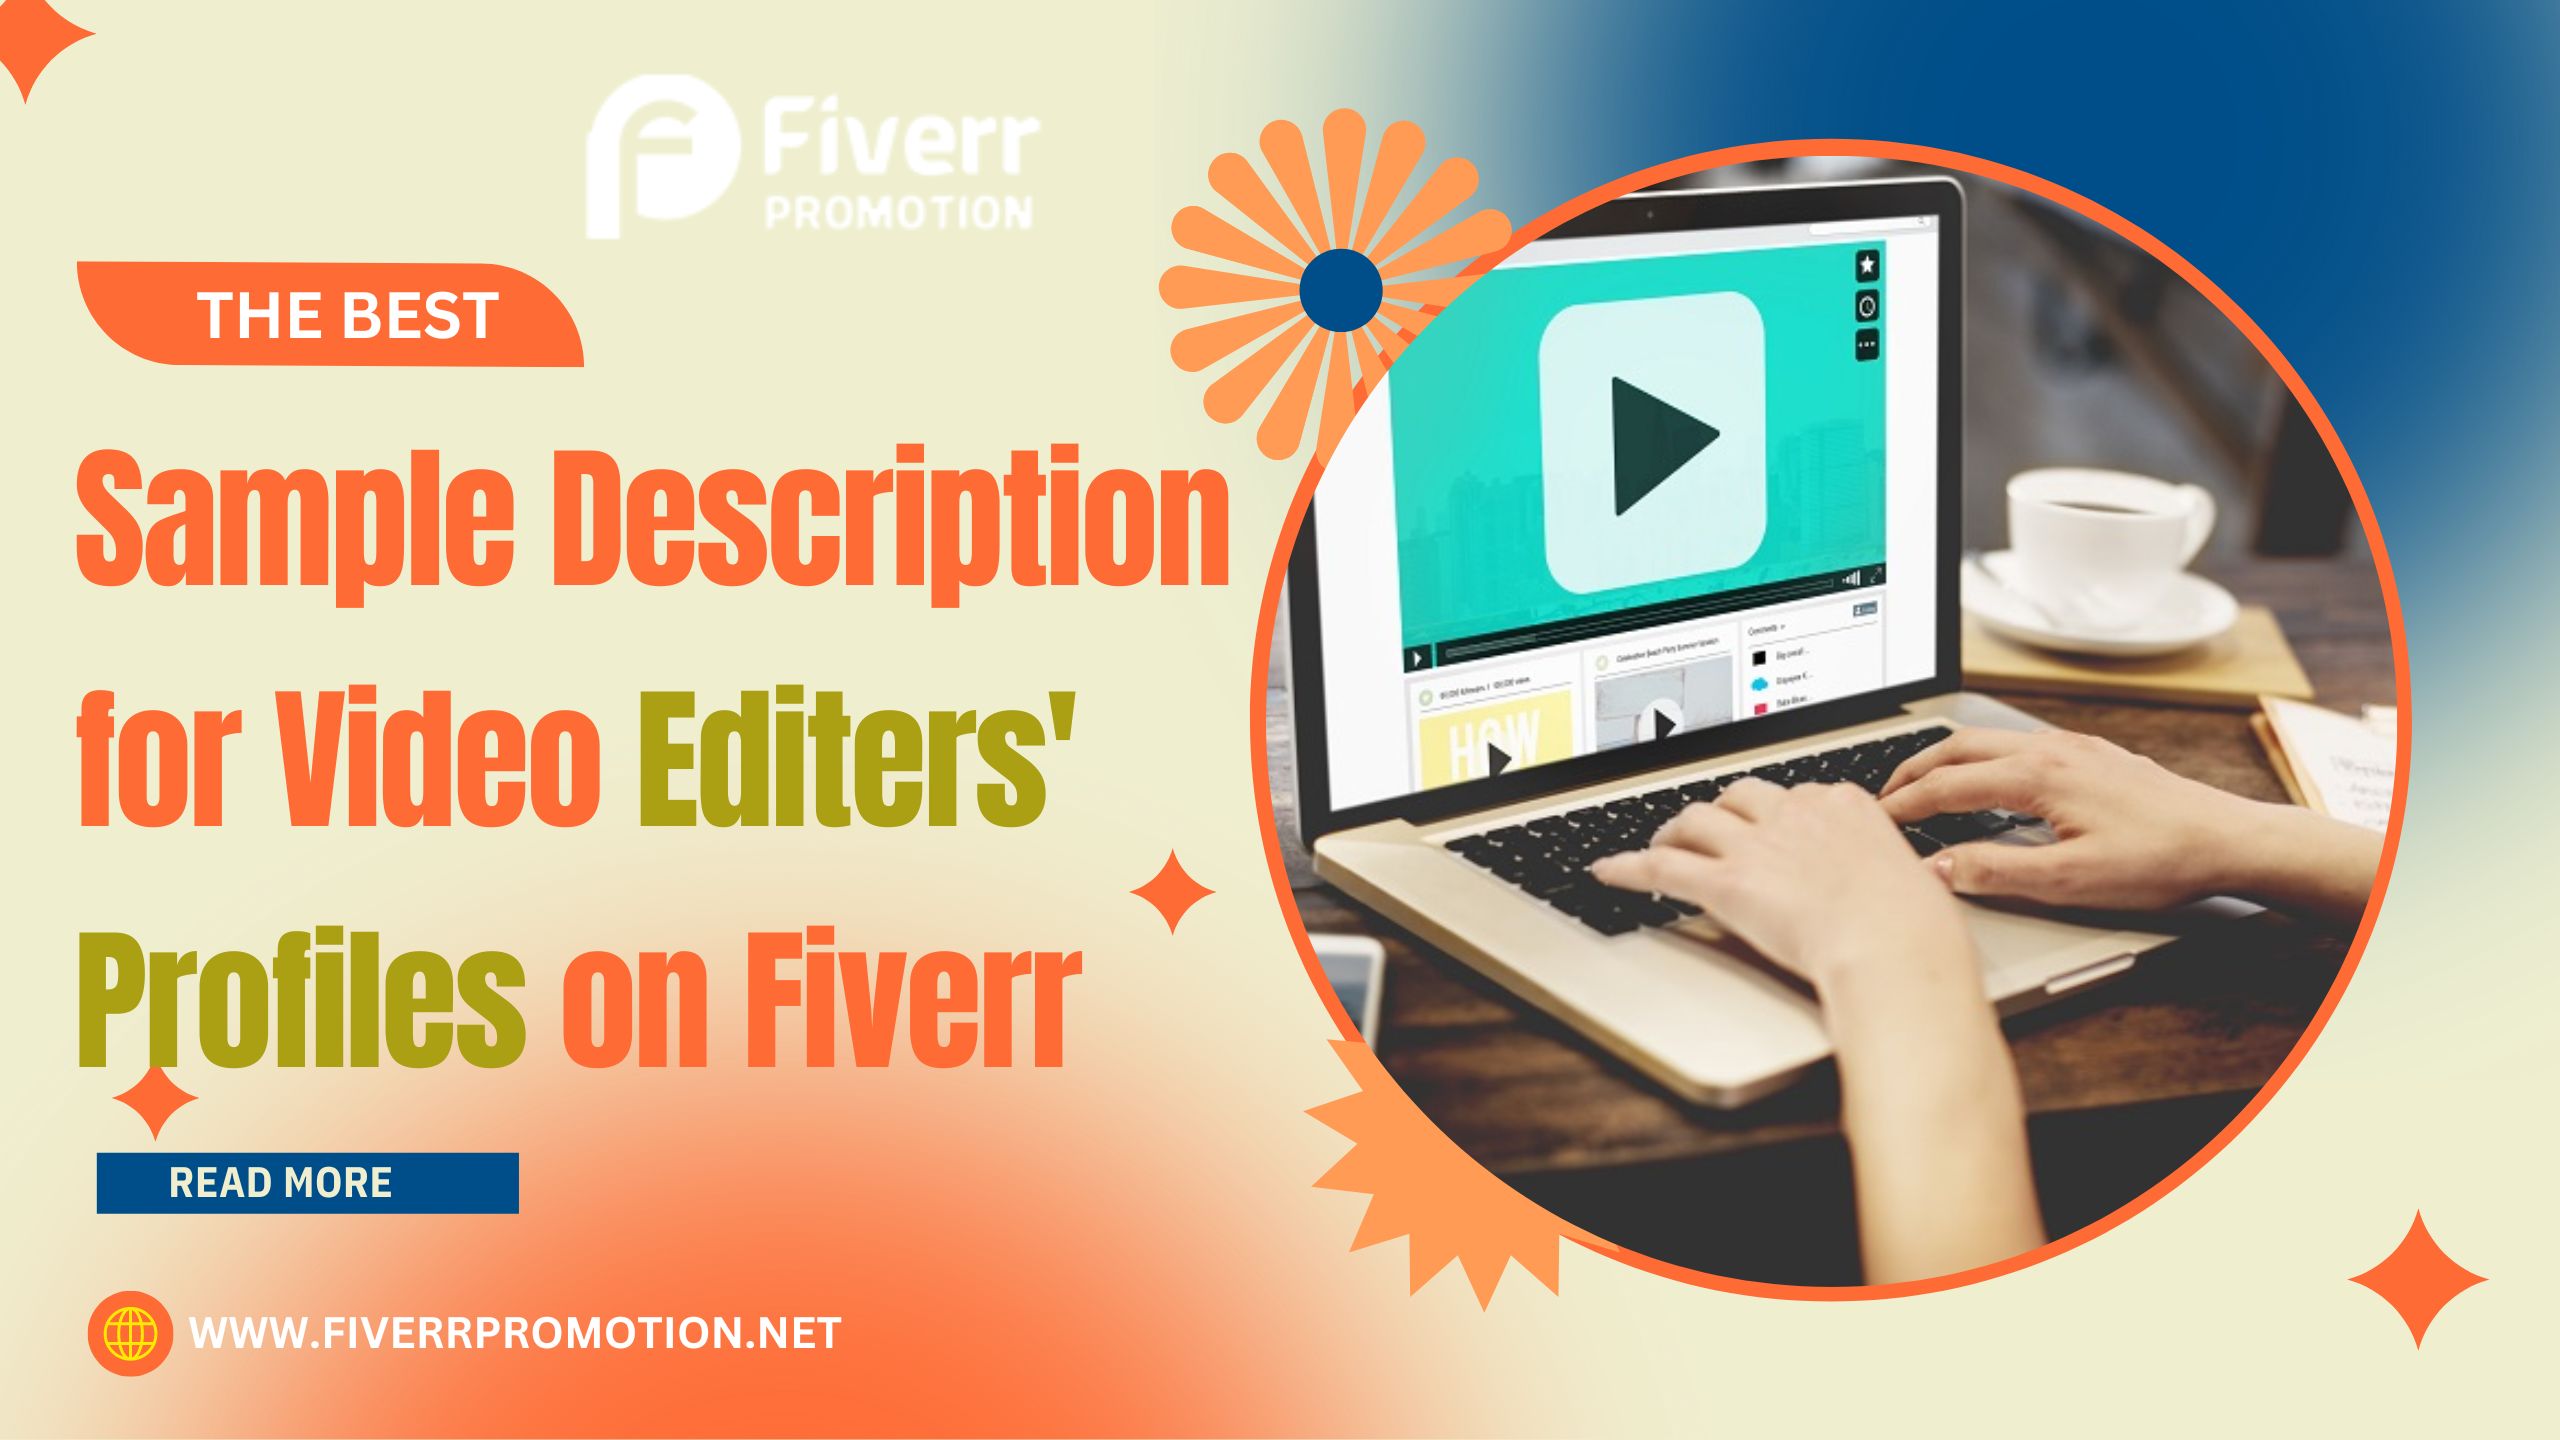 The Best Sample Description for Video Editers’ Profiles on Fiverr